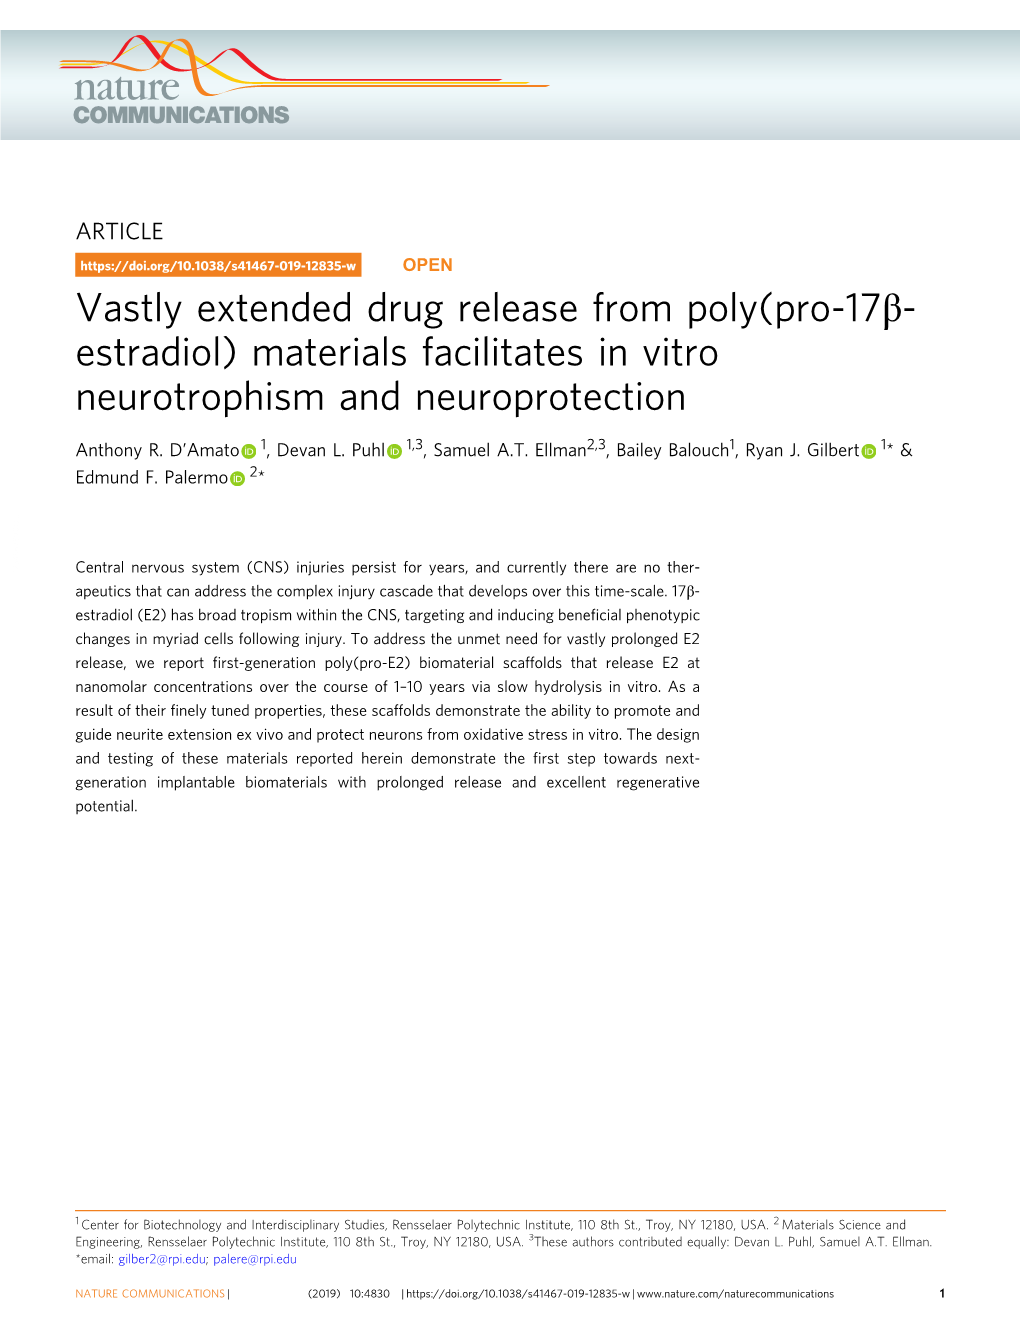 Vastly Extended Drug Release from Poly(Pro-17Î²-Estradiol)